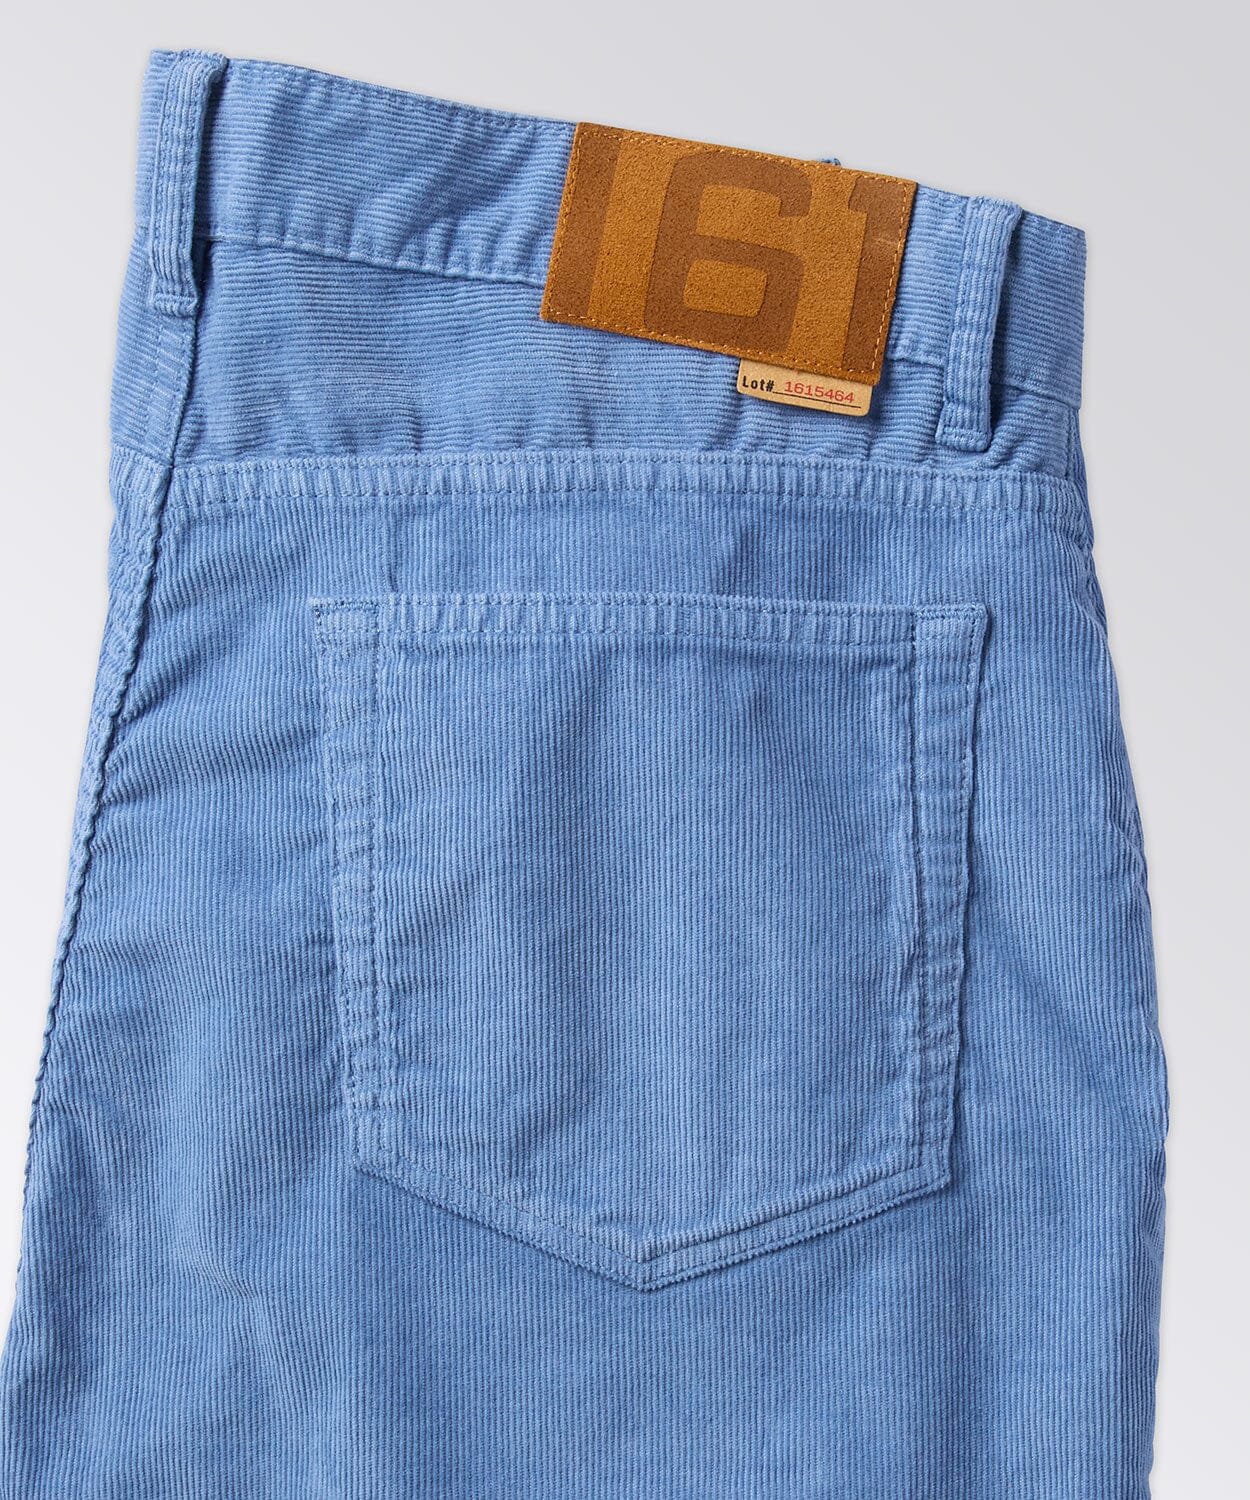 Cabril Corduroy 5-Pocket Pant Pants OOBE BRAND 